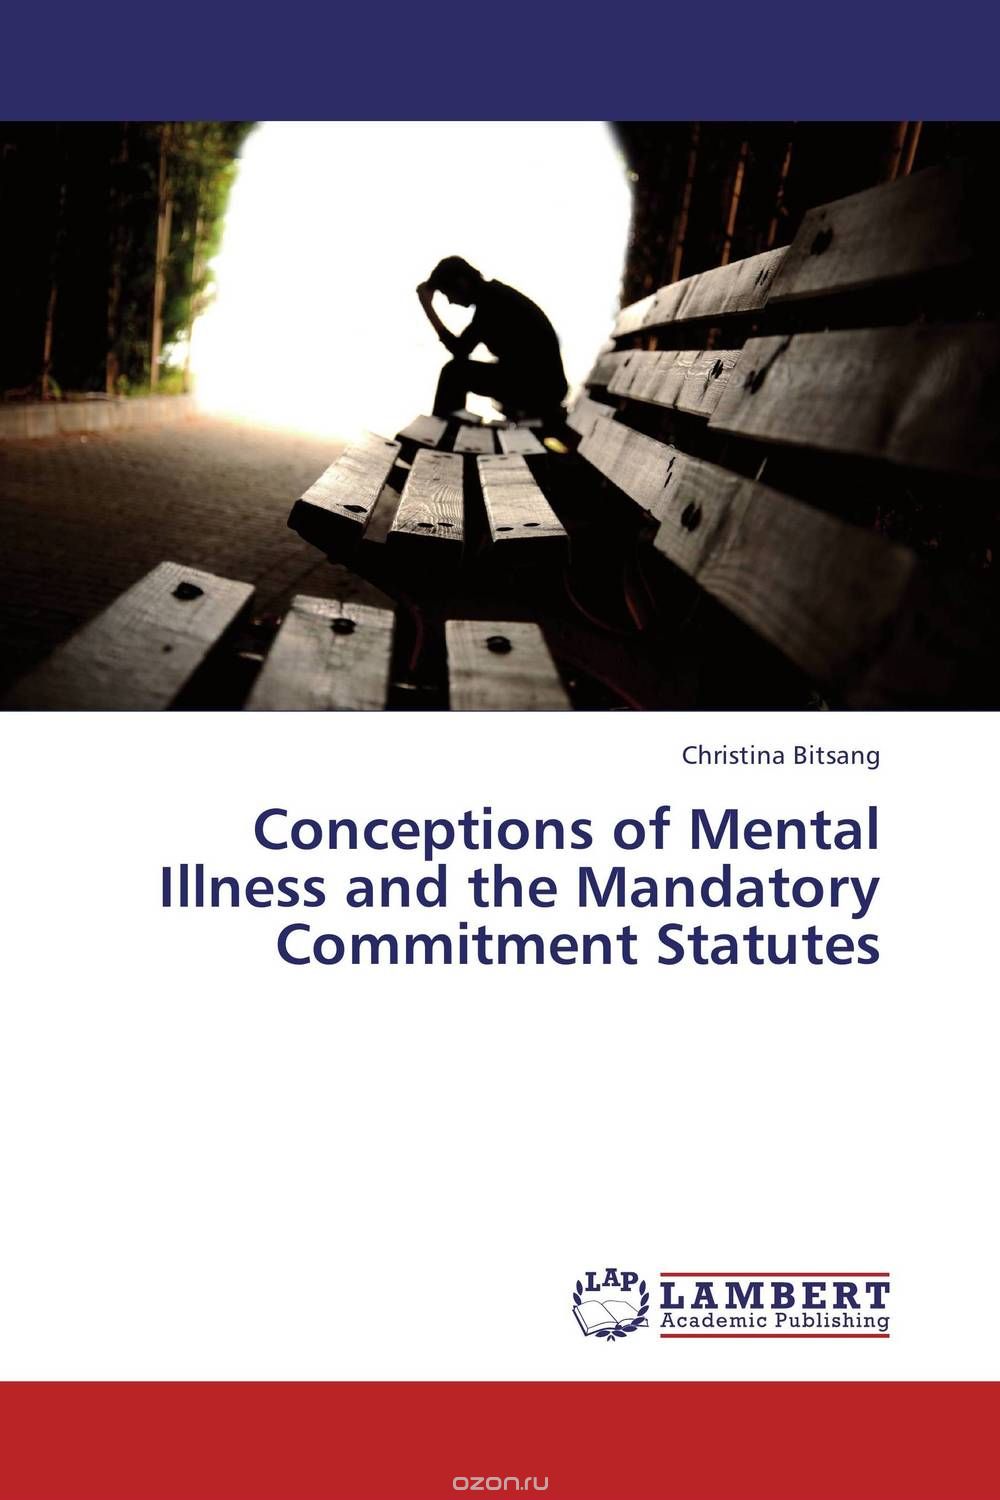 Скачать книгу "Conceptions of Mental Illness and the Mandatory Commitment Statutes"